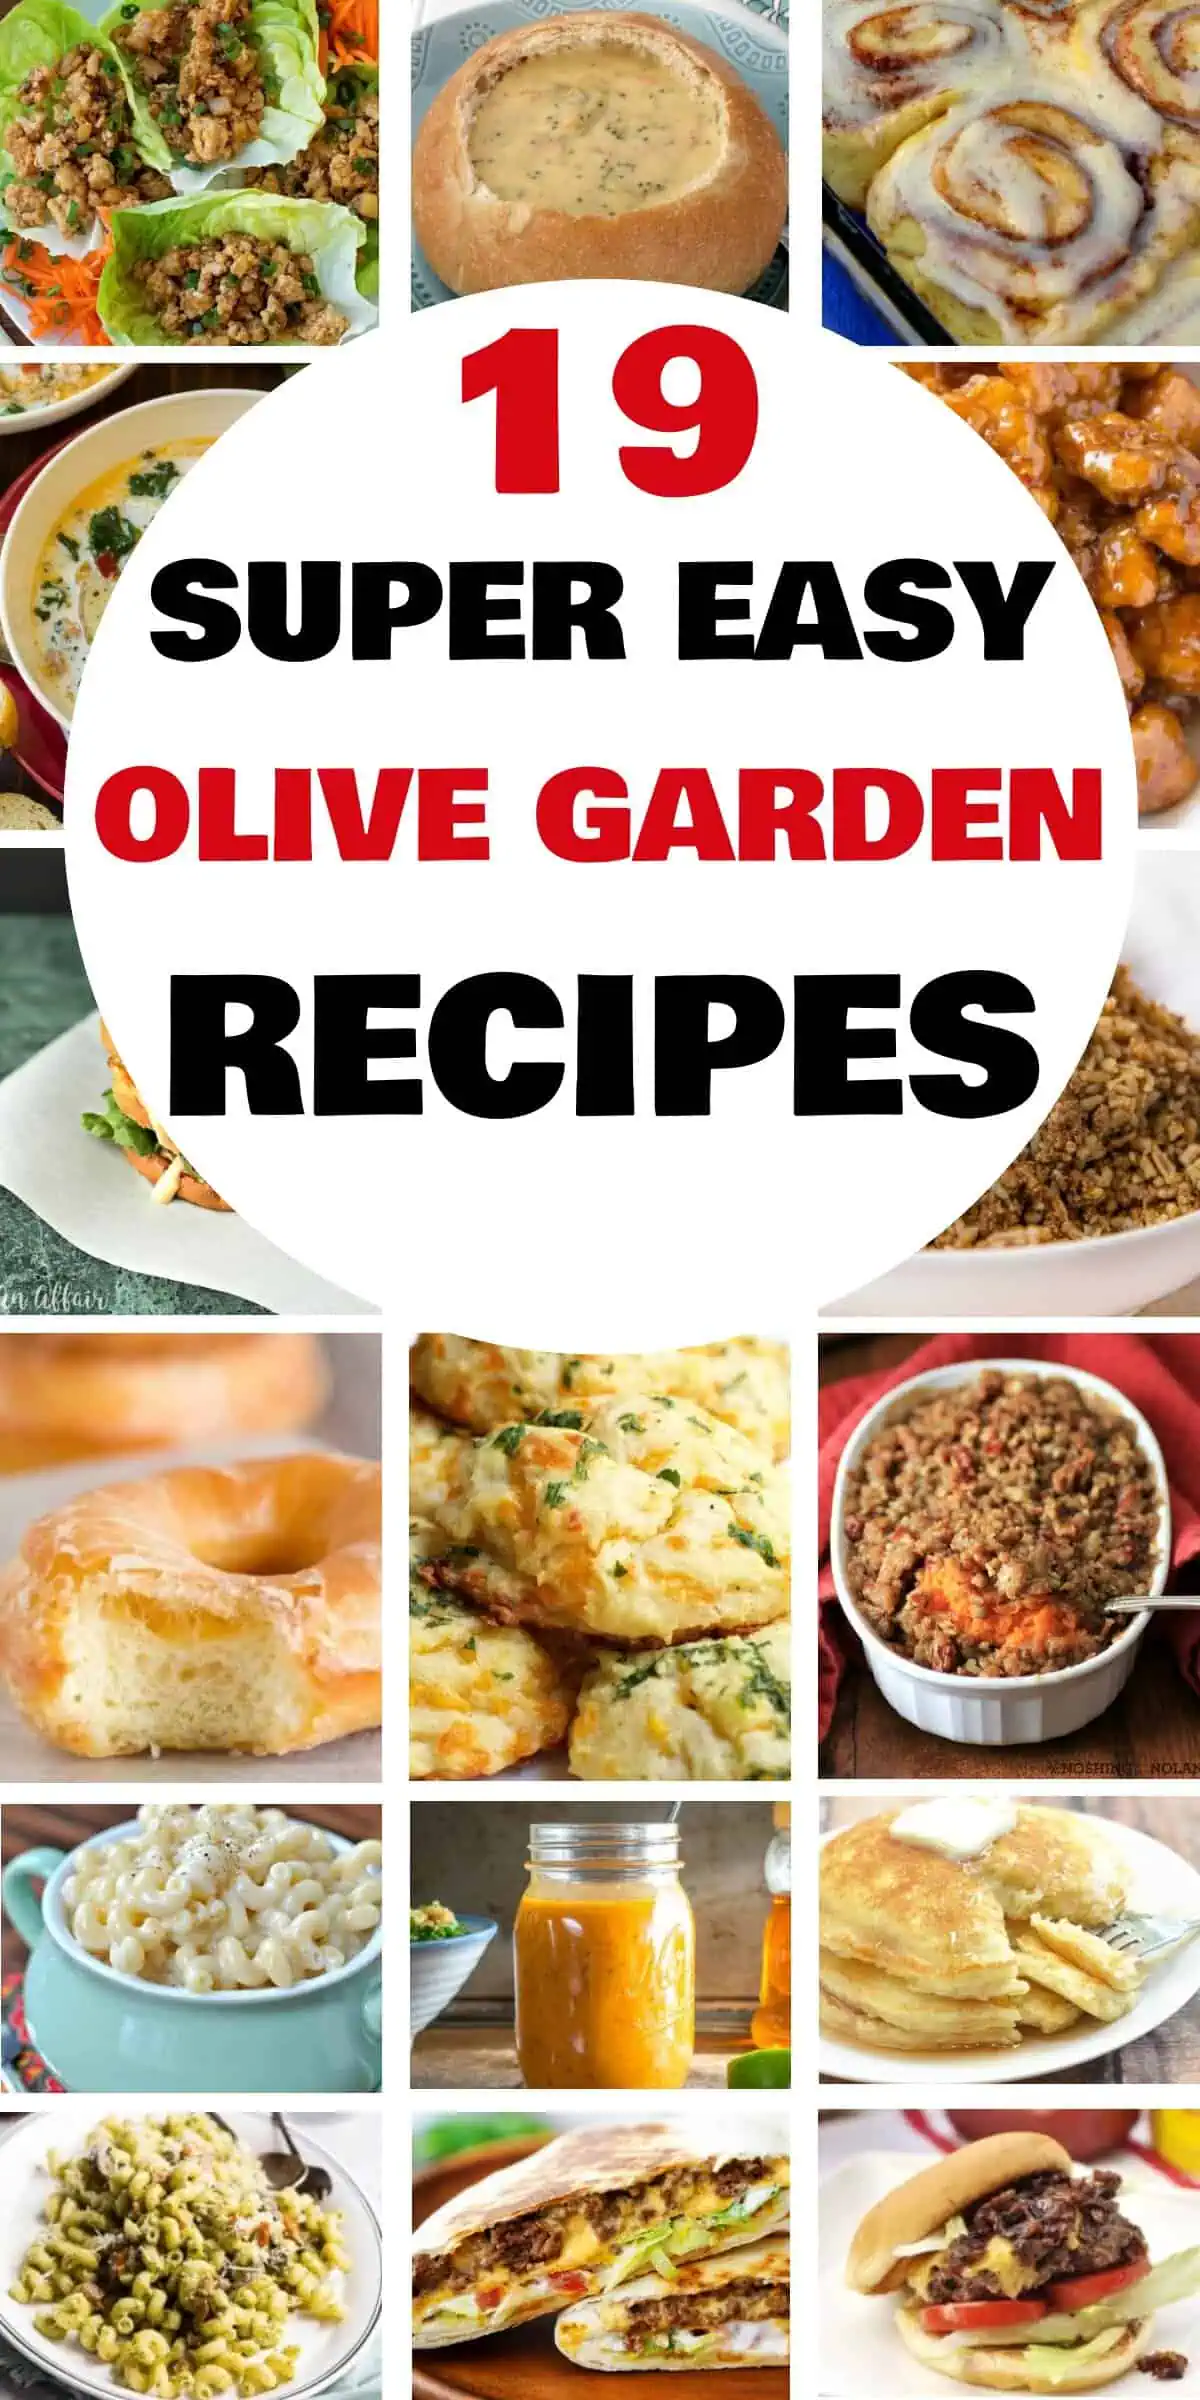 19 Super Easy Olive Garden Recipes